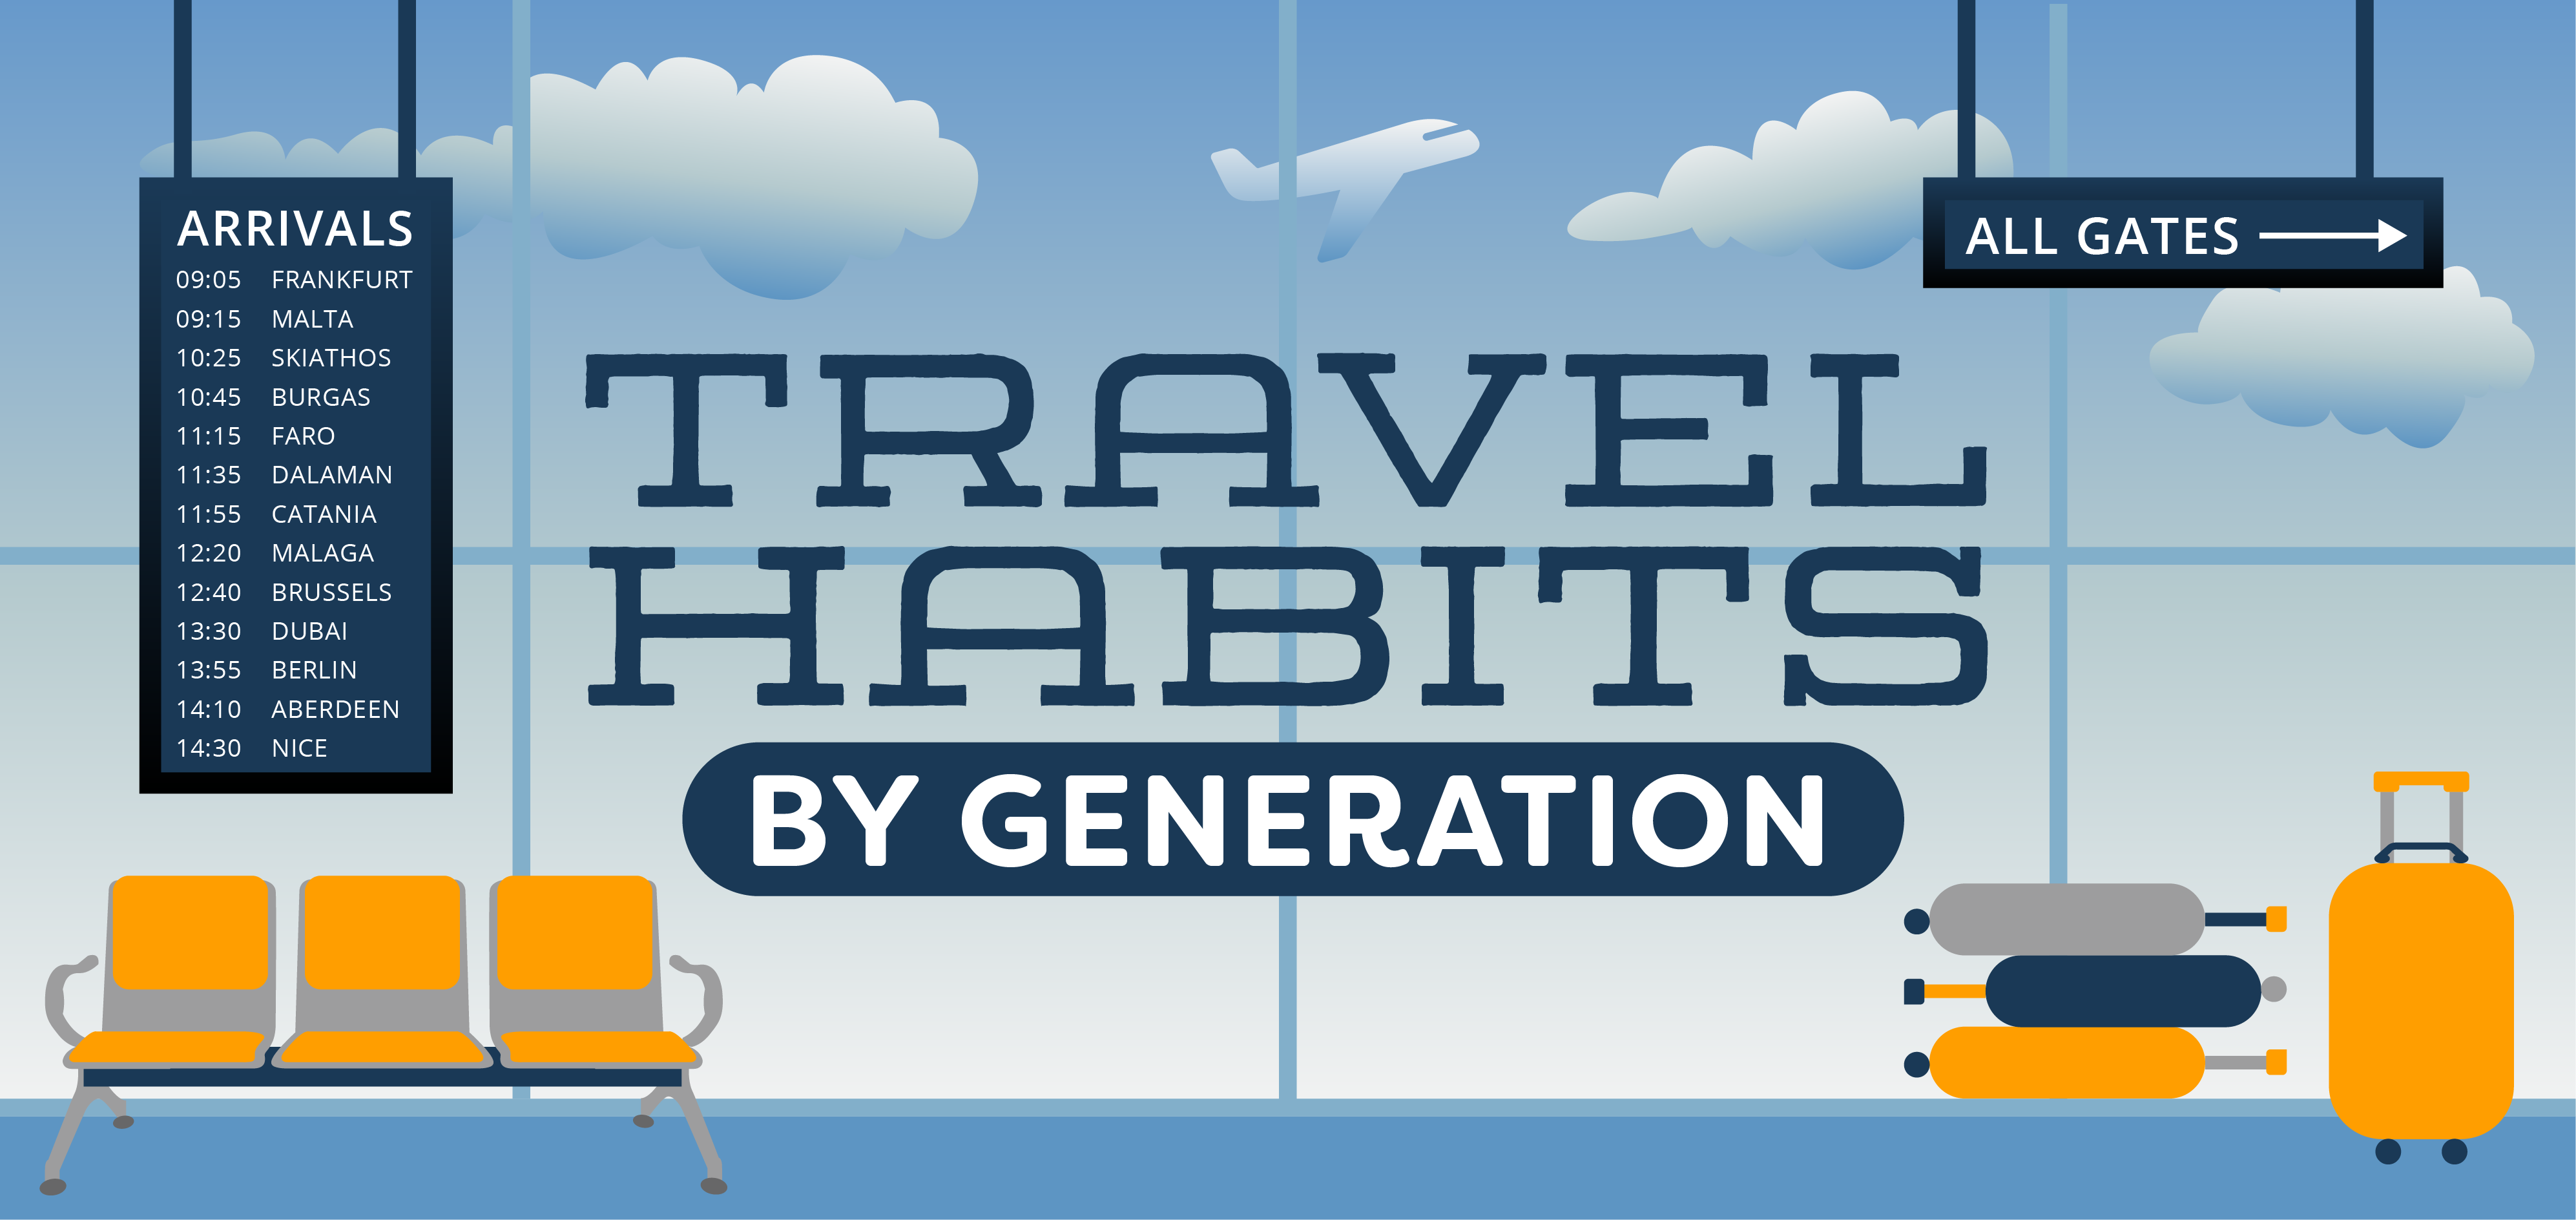 Travel habits by generation